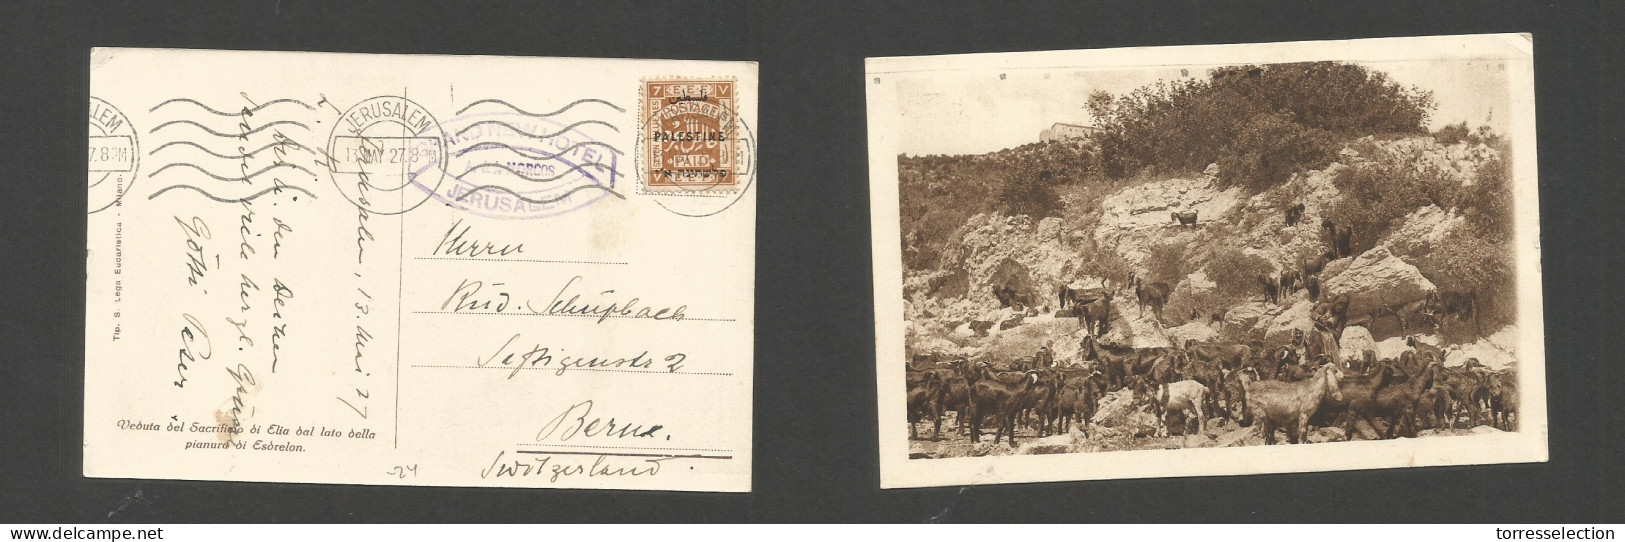 PALESTINE. 1927 (13 May) Jerusalem - Switzerland, Bern. Fkd Ppc. Gorts At Esbrelon. Ovptd Issue Rolling Cachet. SALE. - Palestina